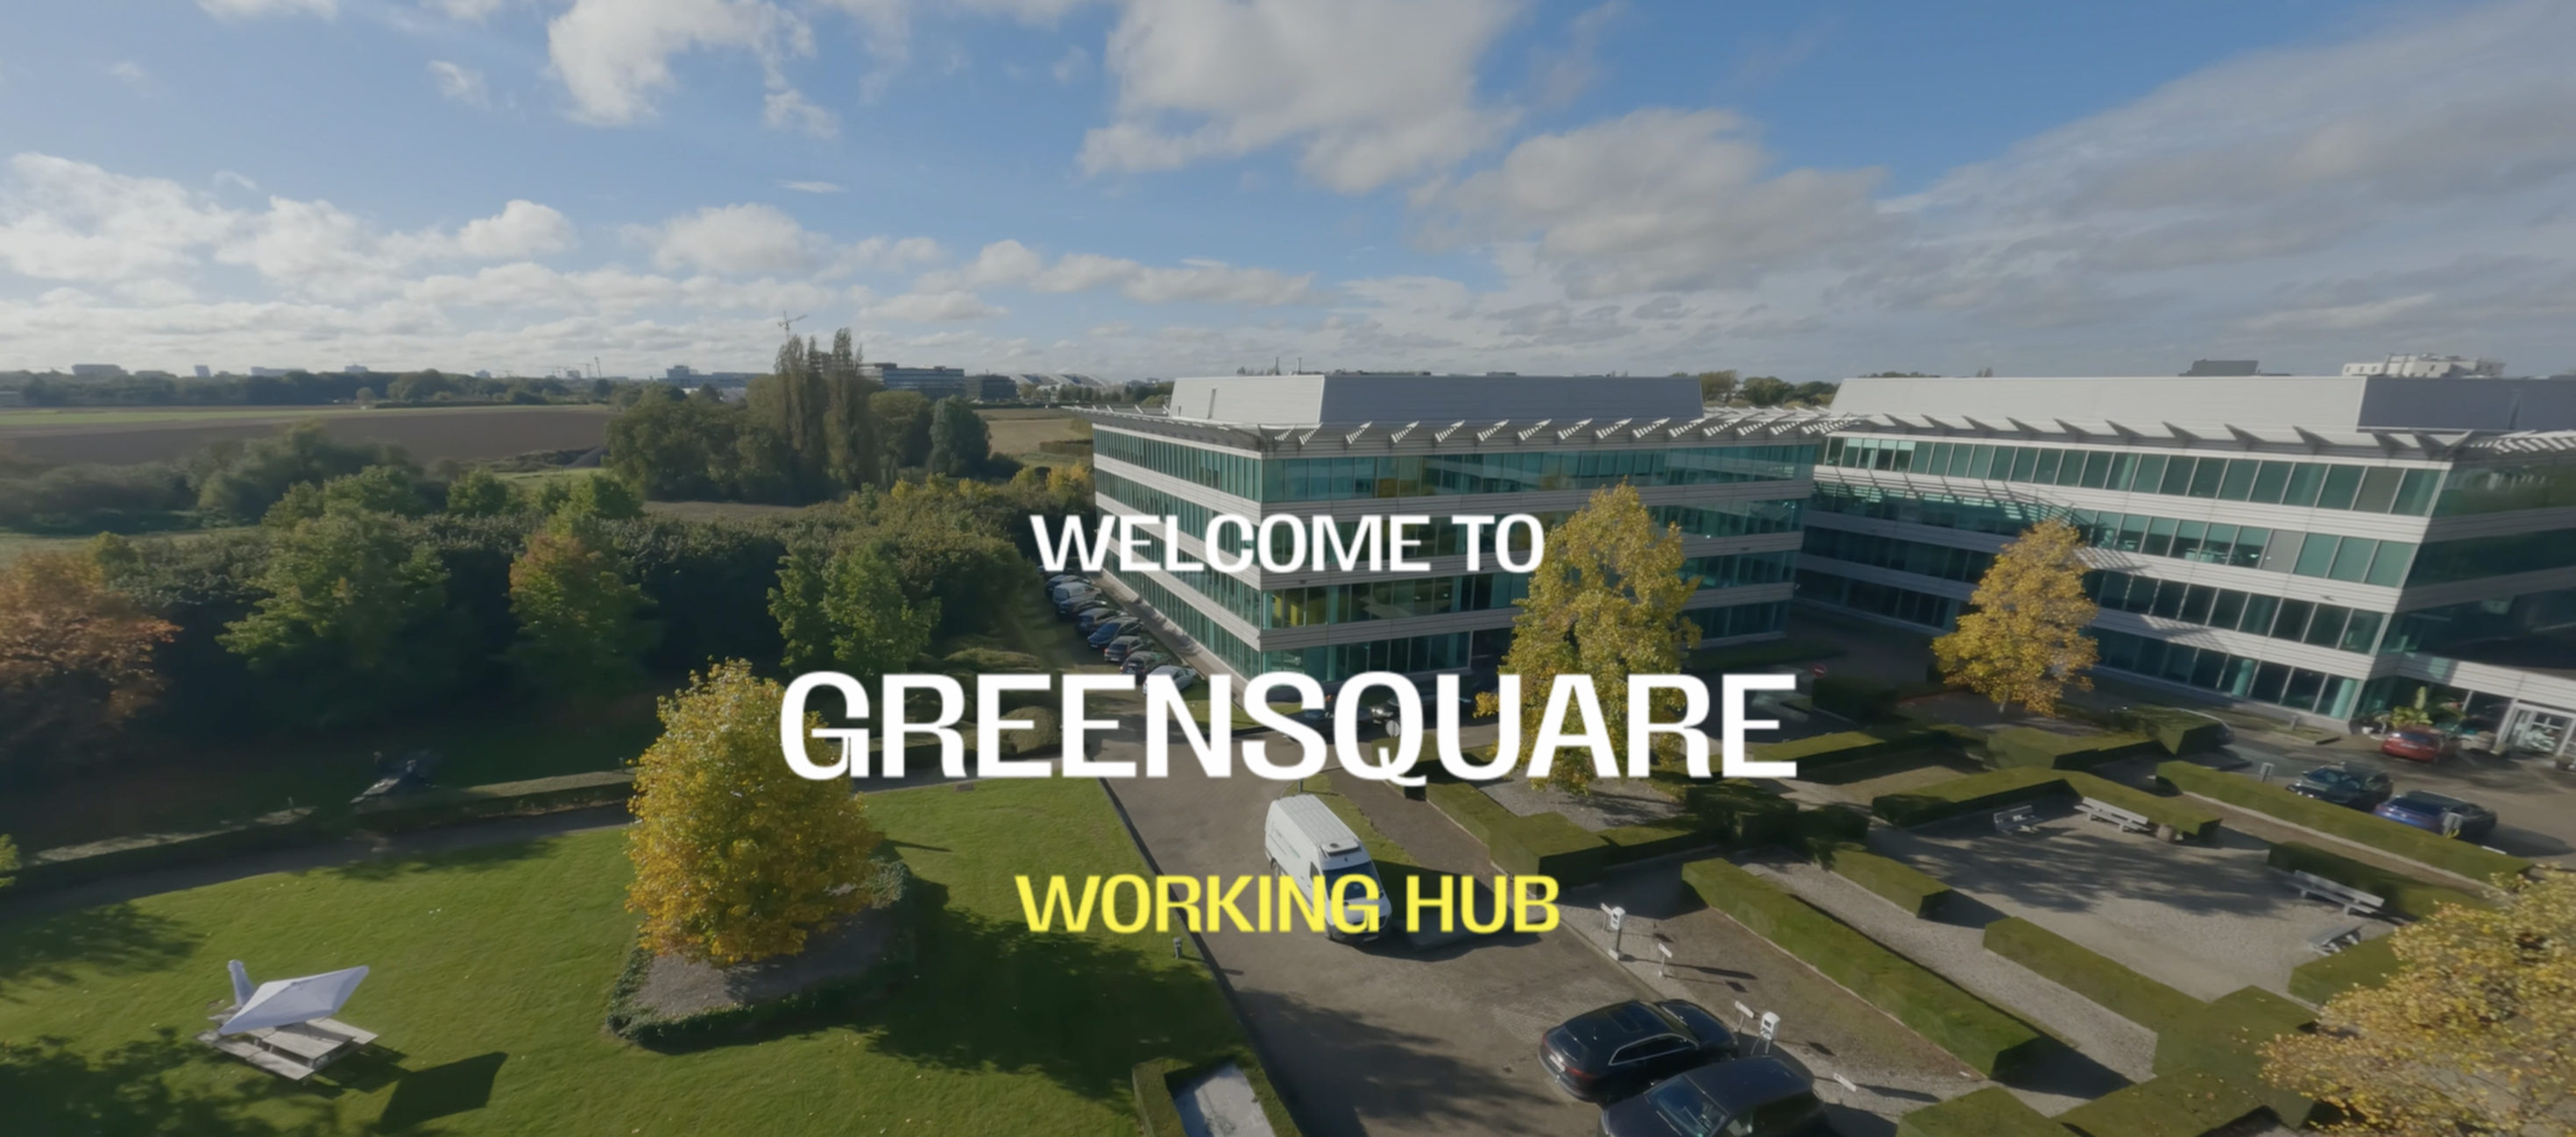 Greensquare werk hub video